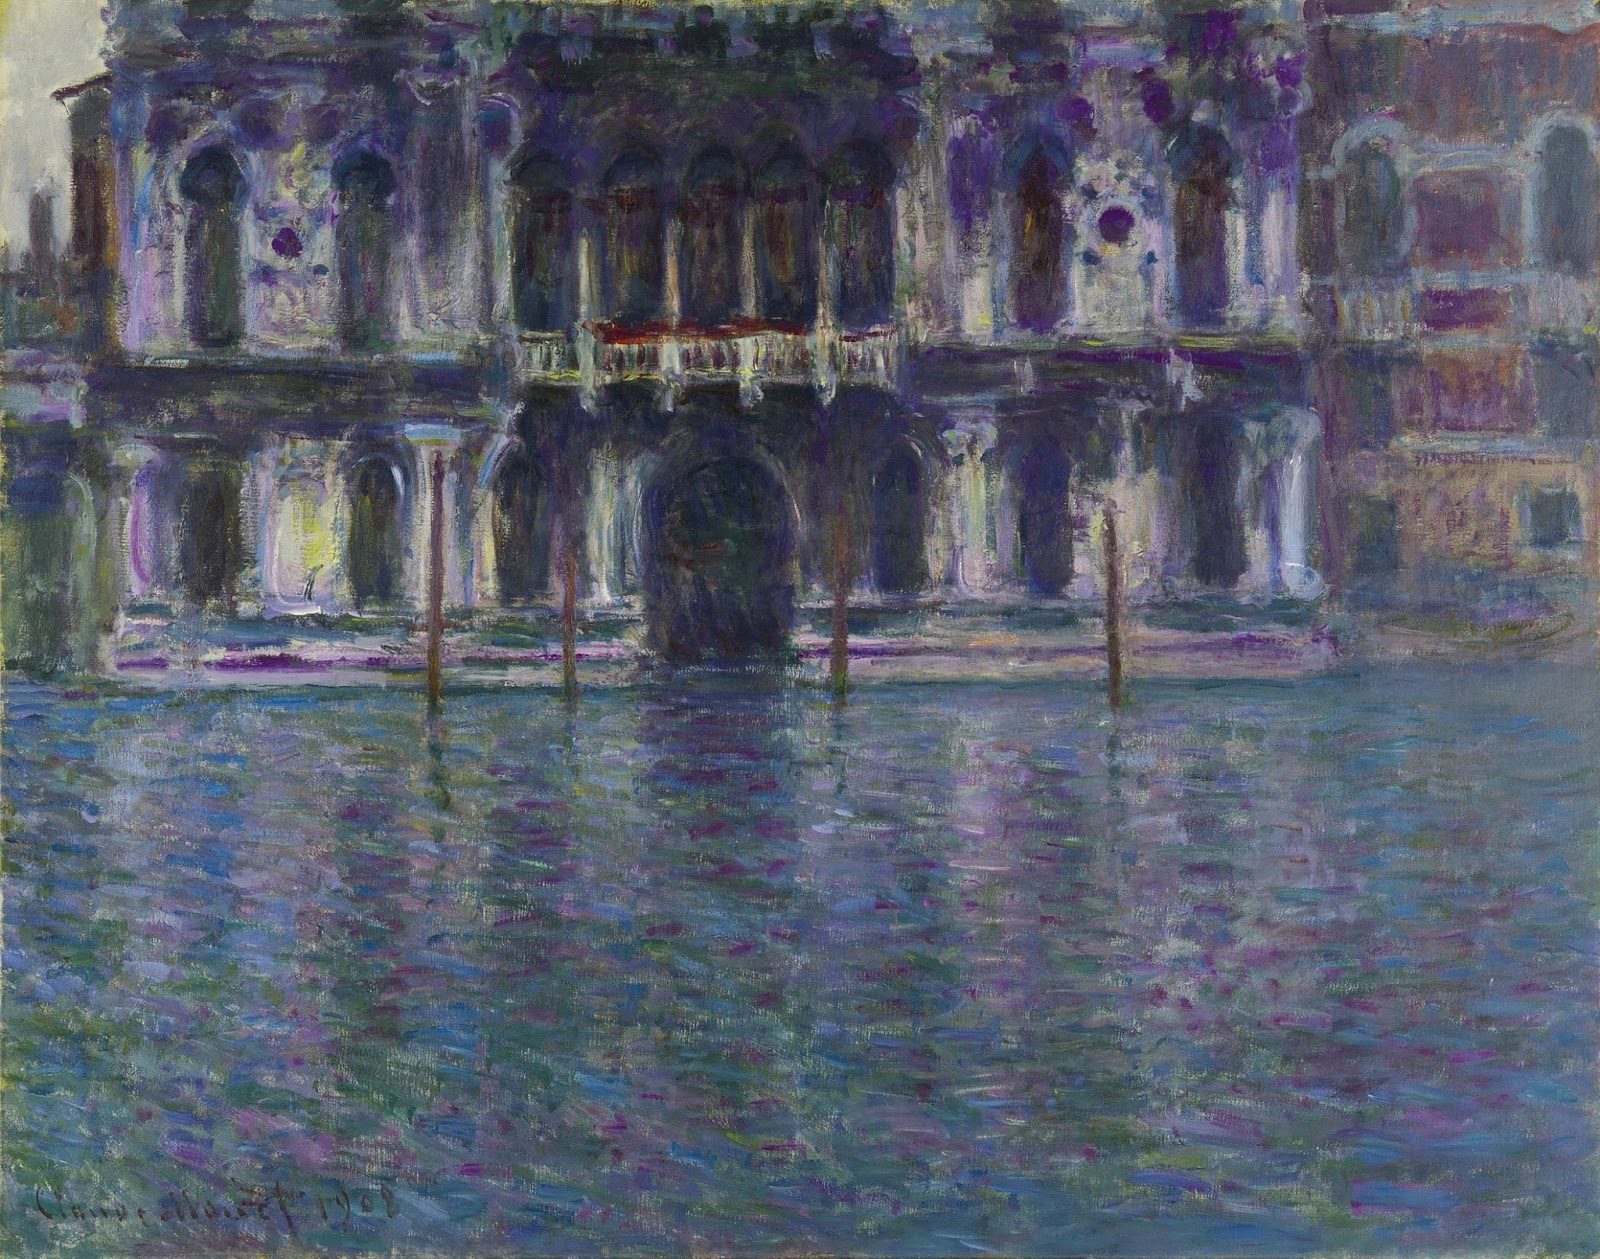 Claude+Monet-1840-1926 (436).jpg